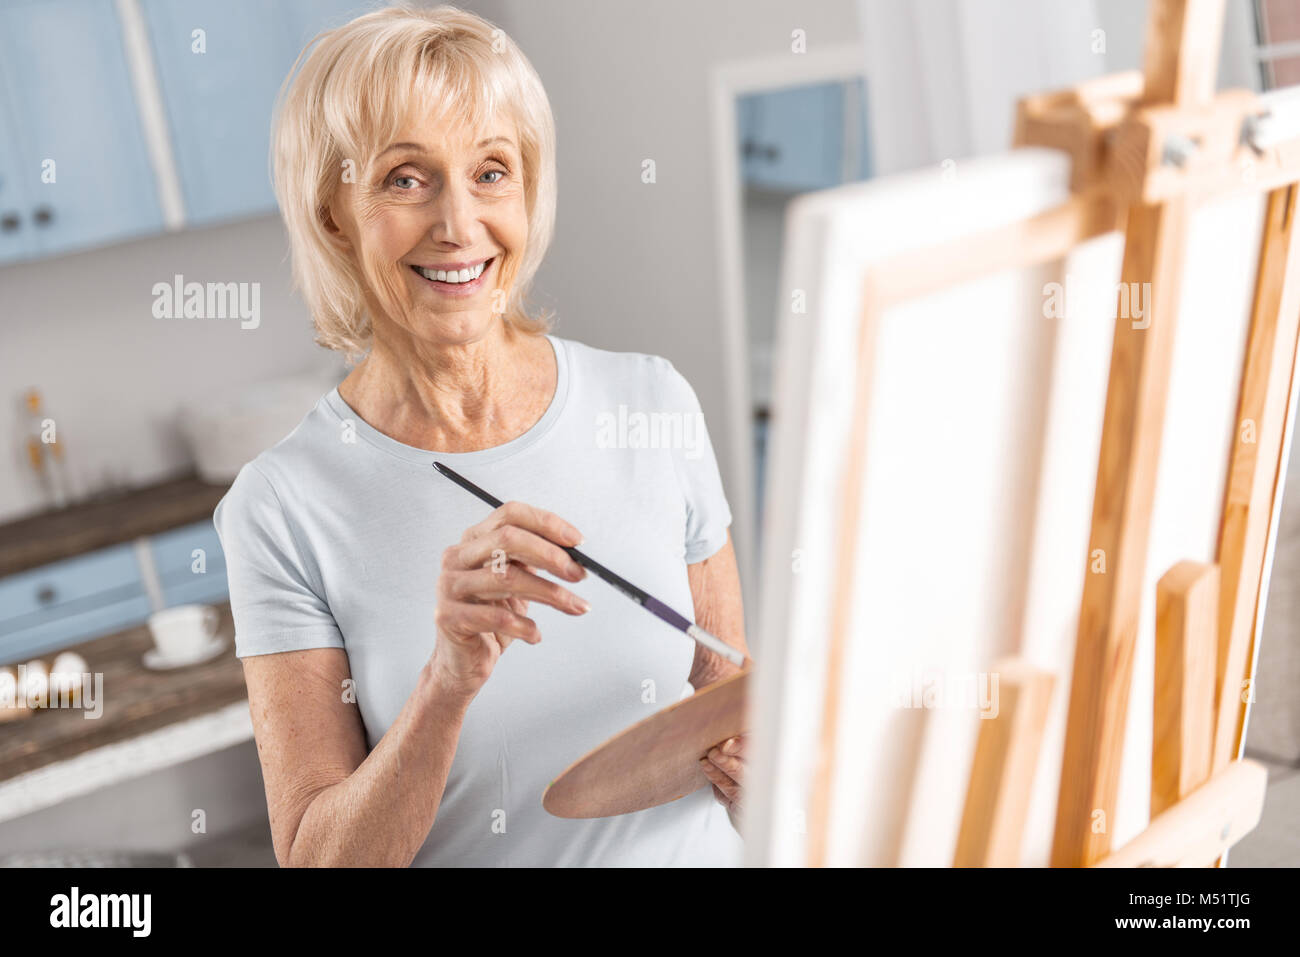 Joyful mature woman enjoying hobby Stock Photo